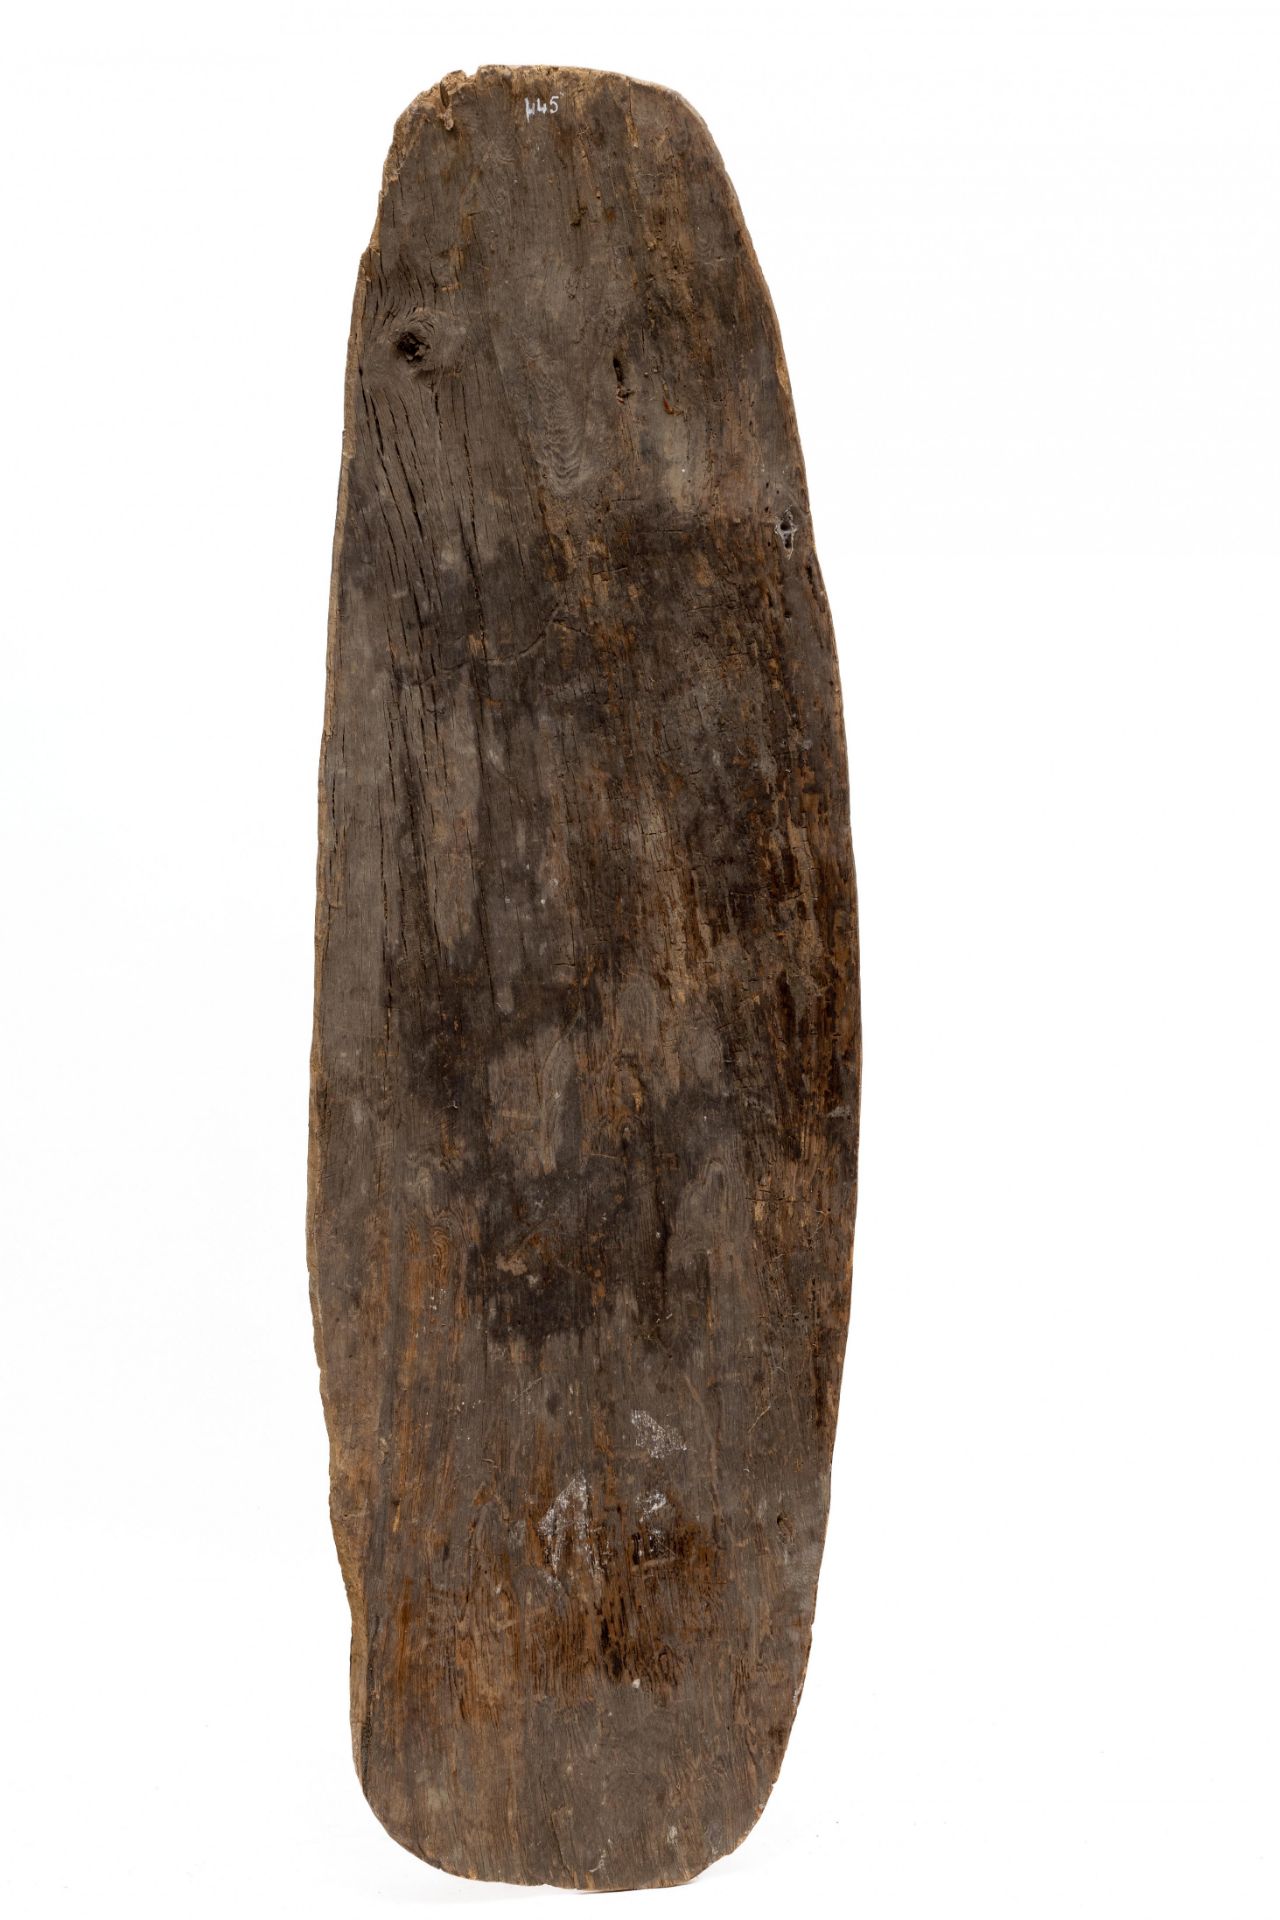 P.N. Guinea, Upper Sepik, a carved wooden panel - Image 2 of 2